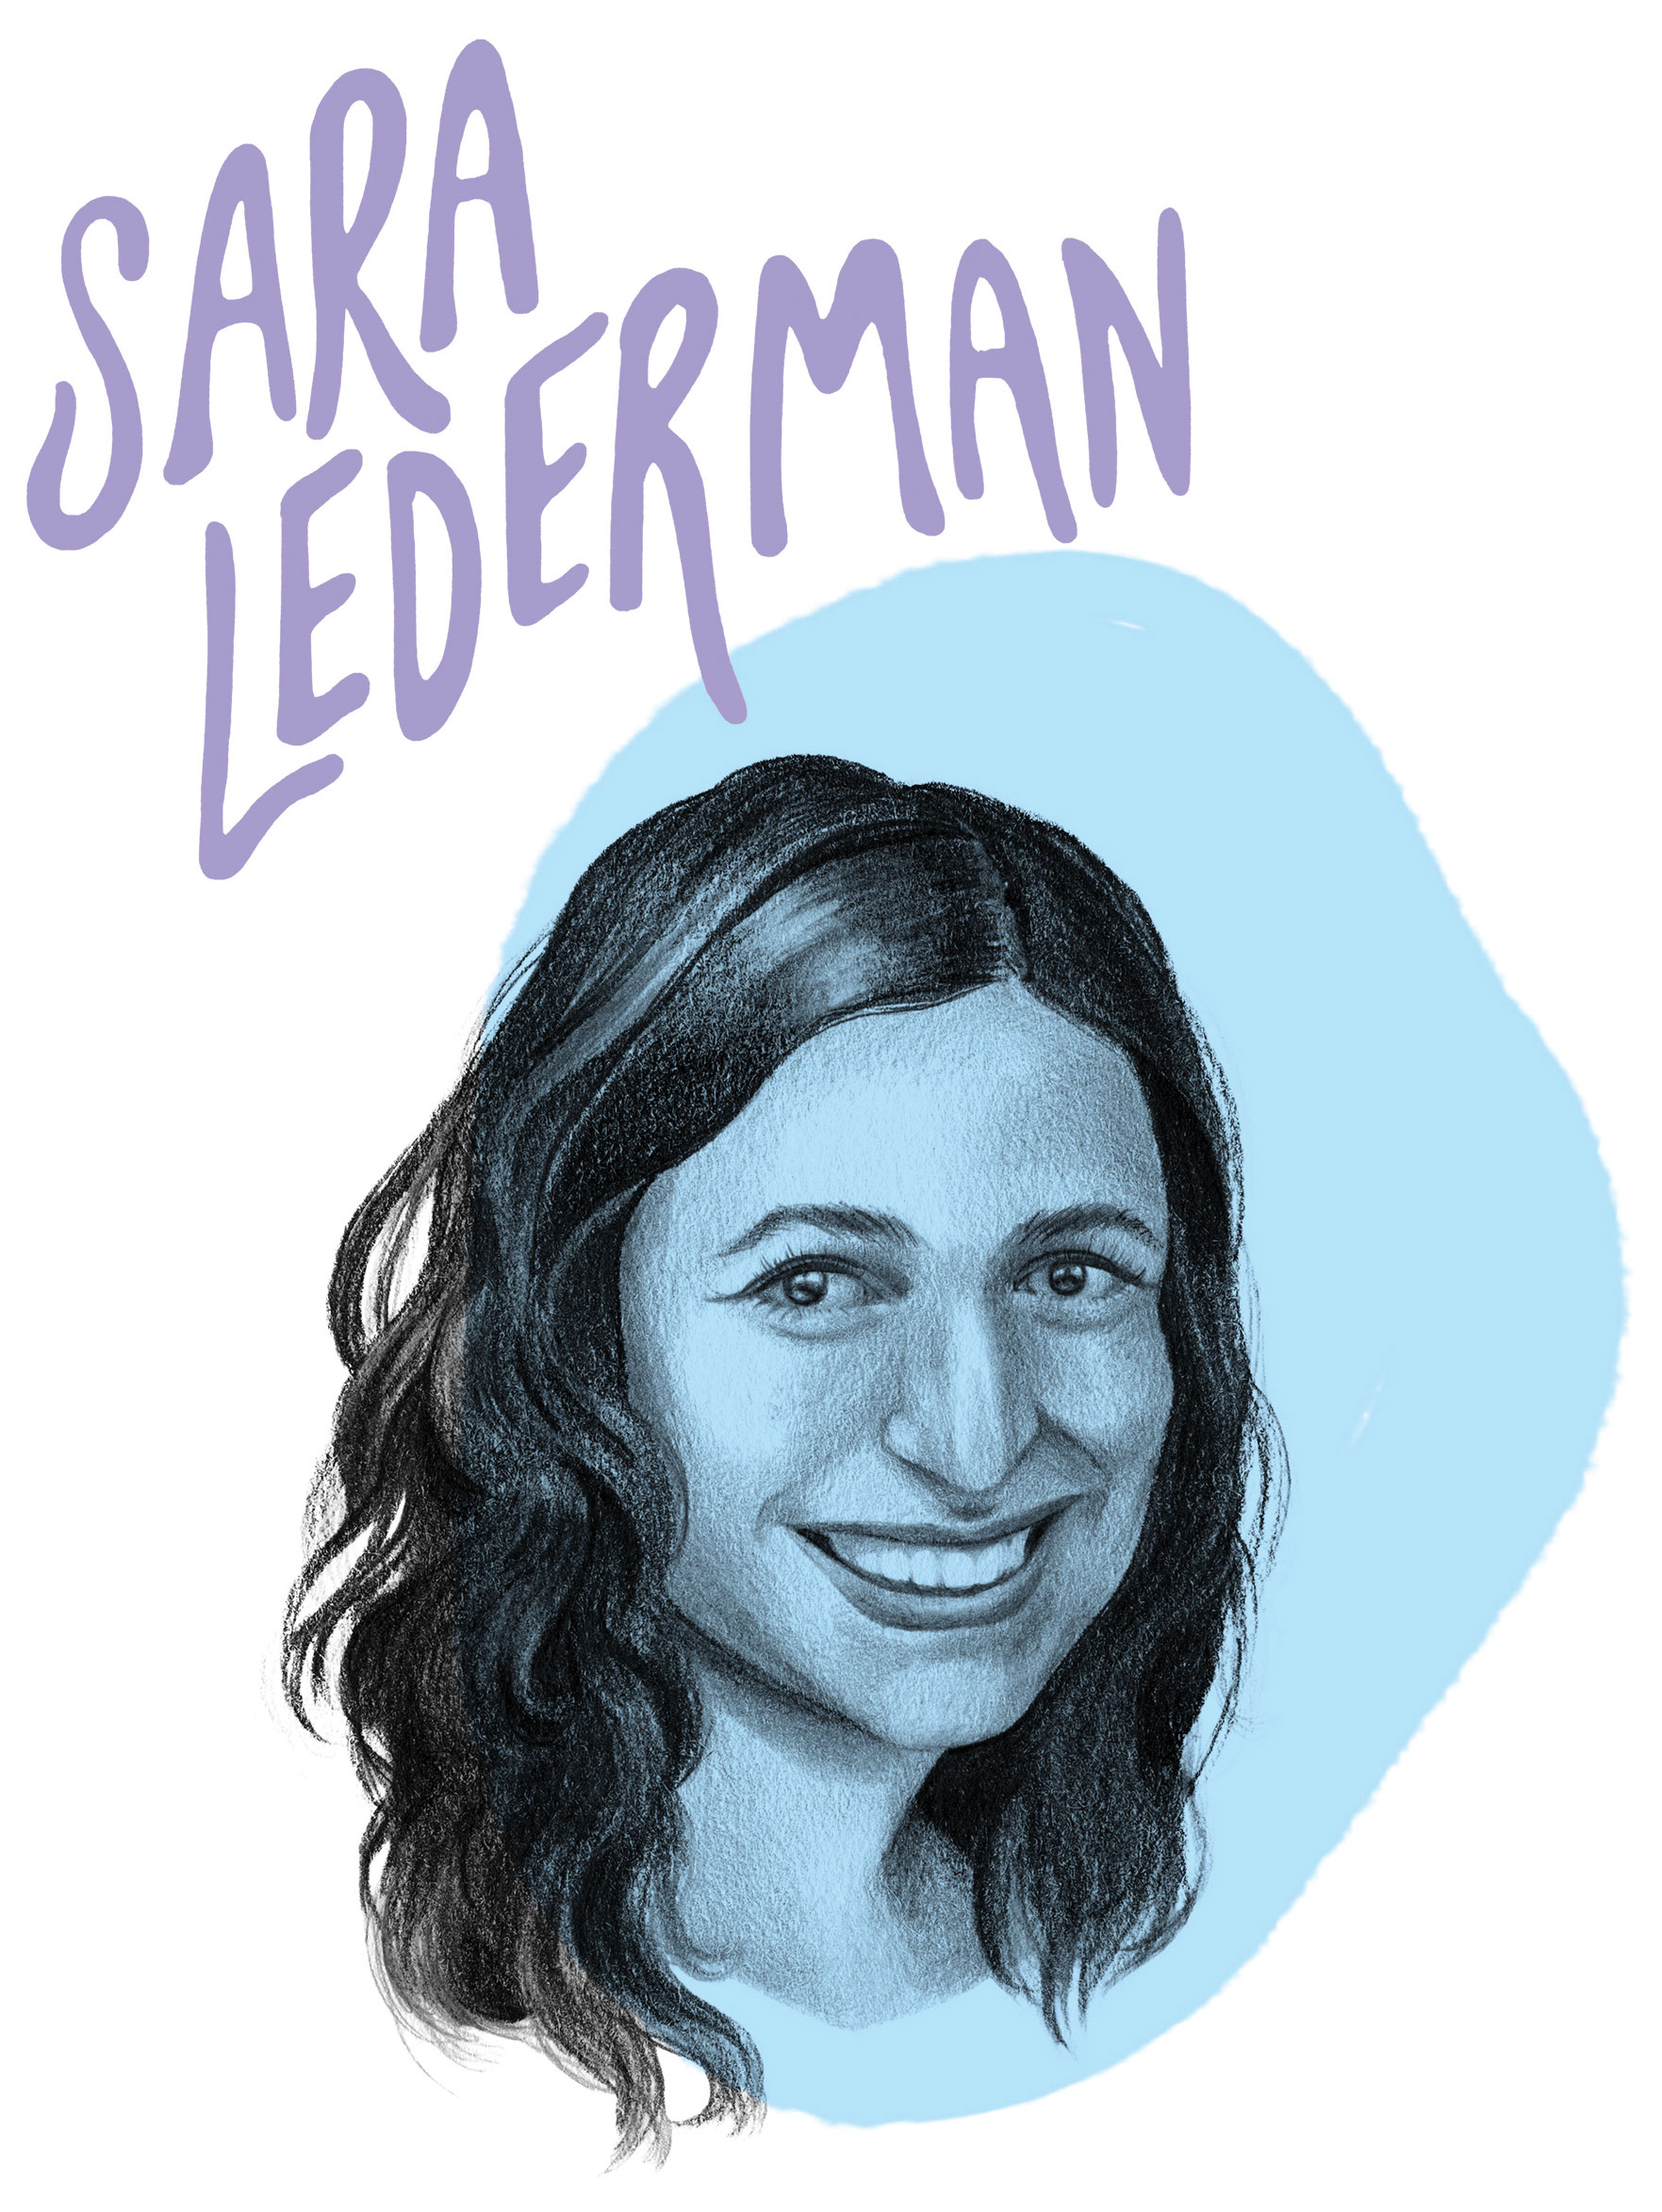 Sara Lederman Portrait Illustration